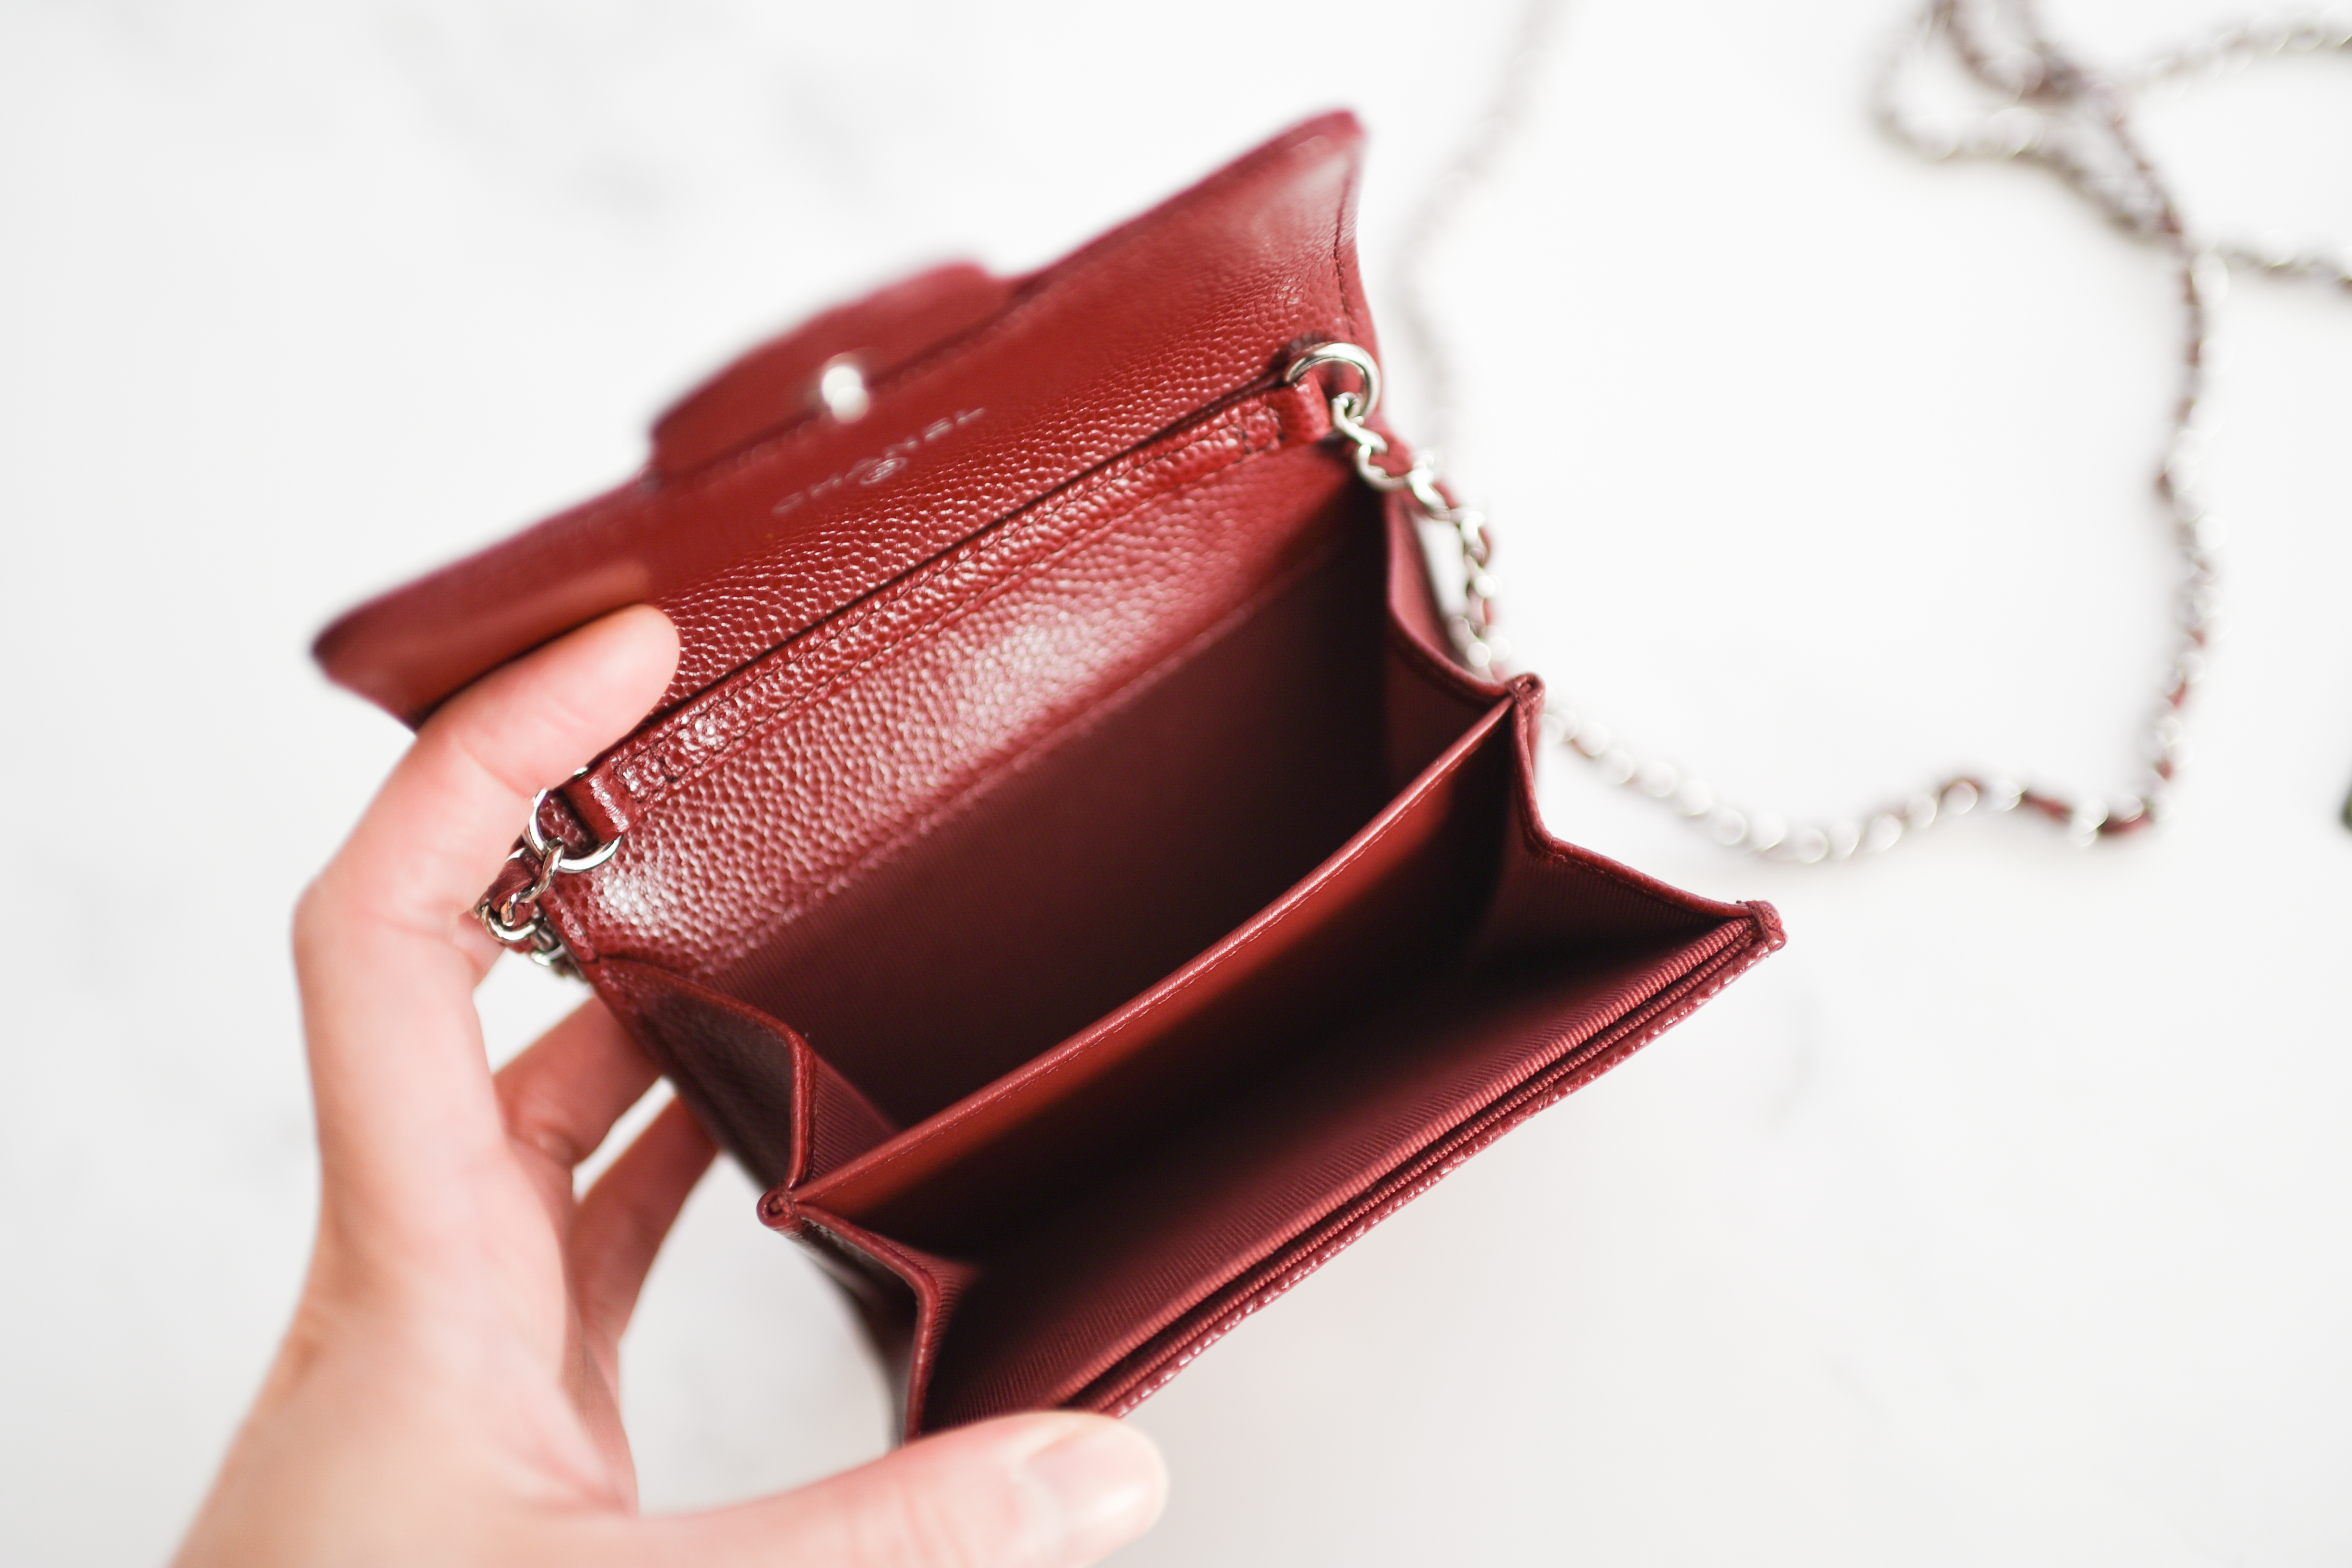 Review: Chanel card holder – Buy the goddamn bag